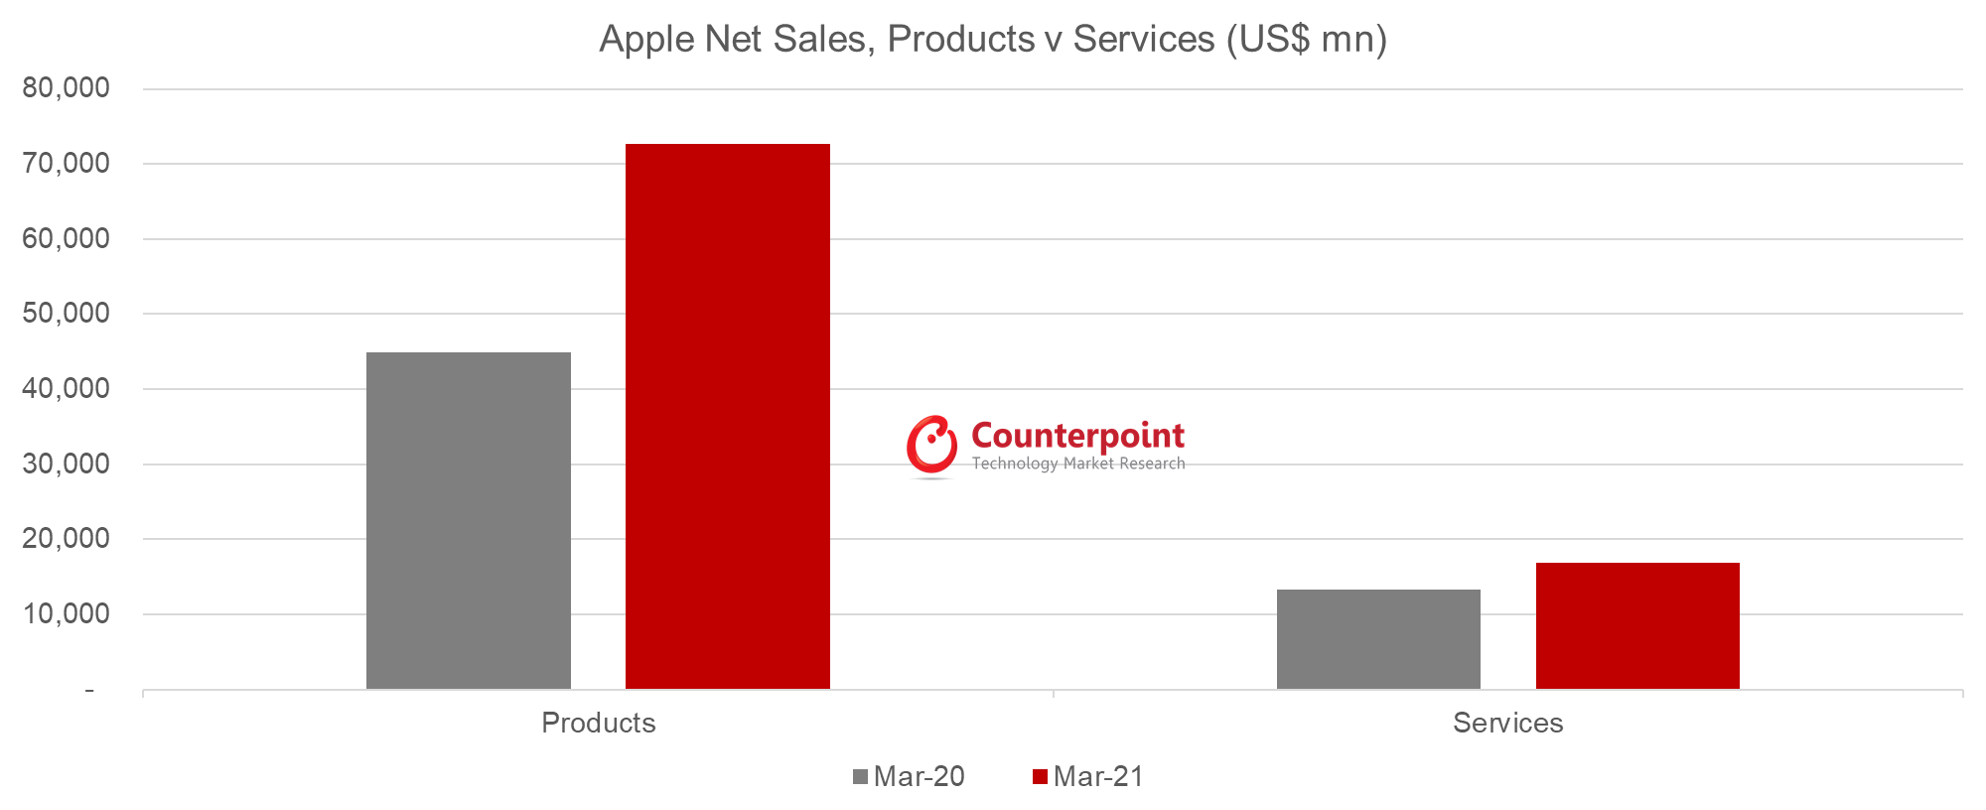 Counterpoint Research:苹果产品与服务的净销售额